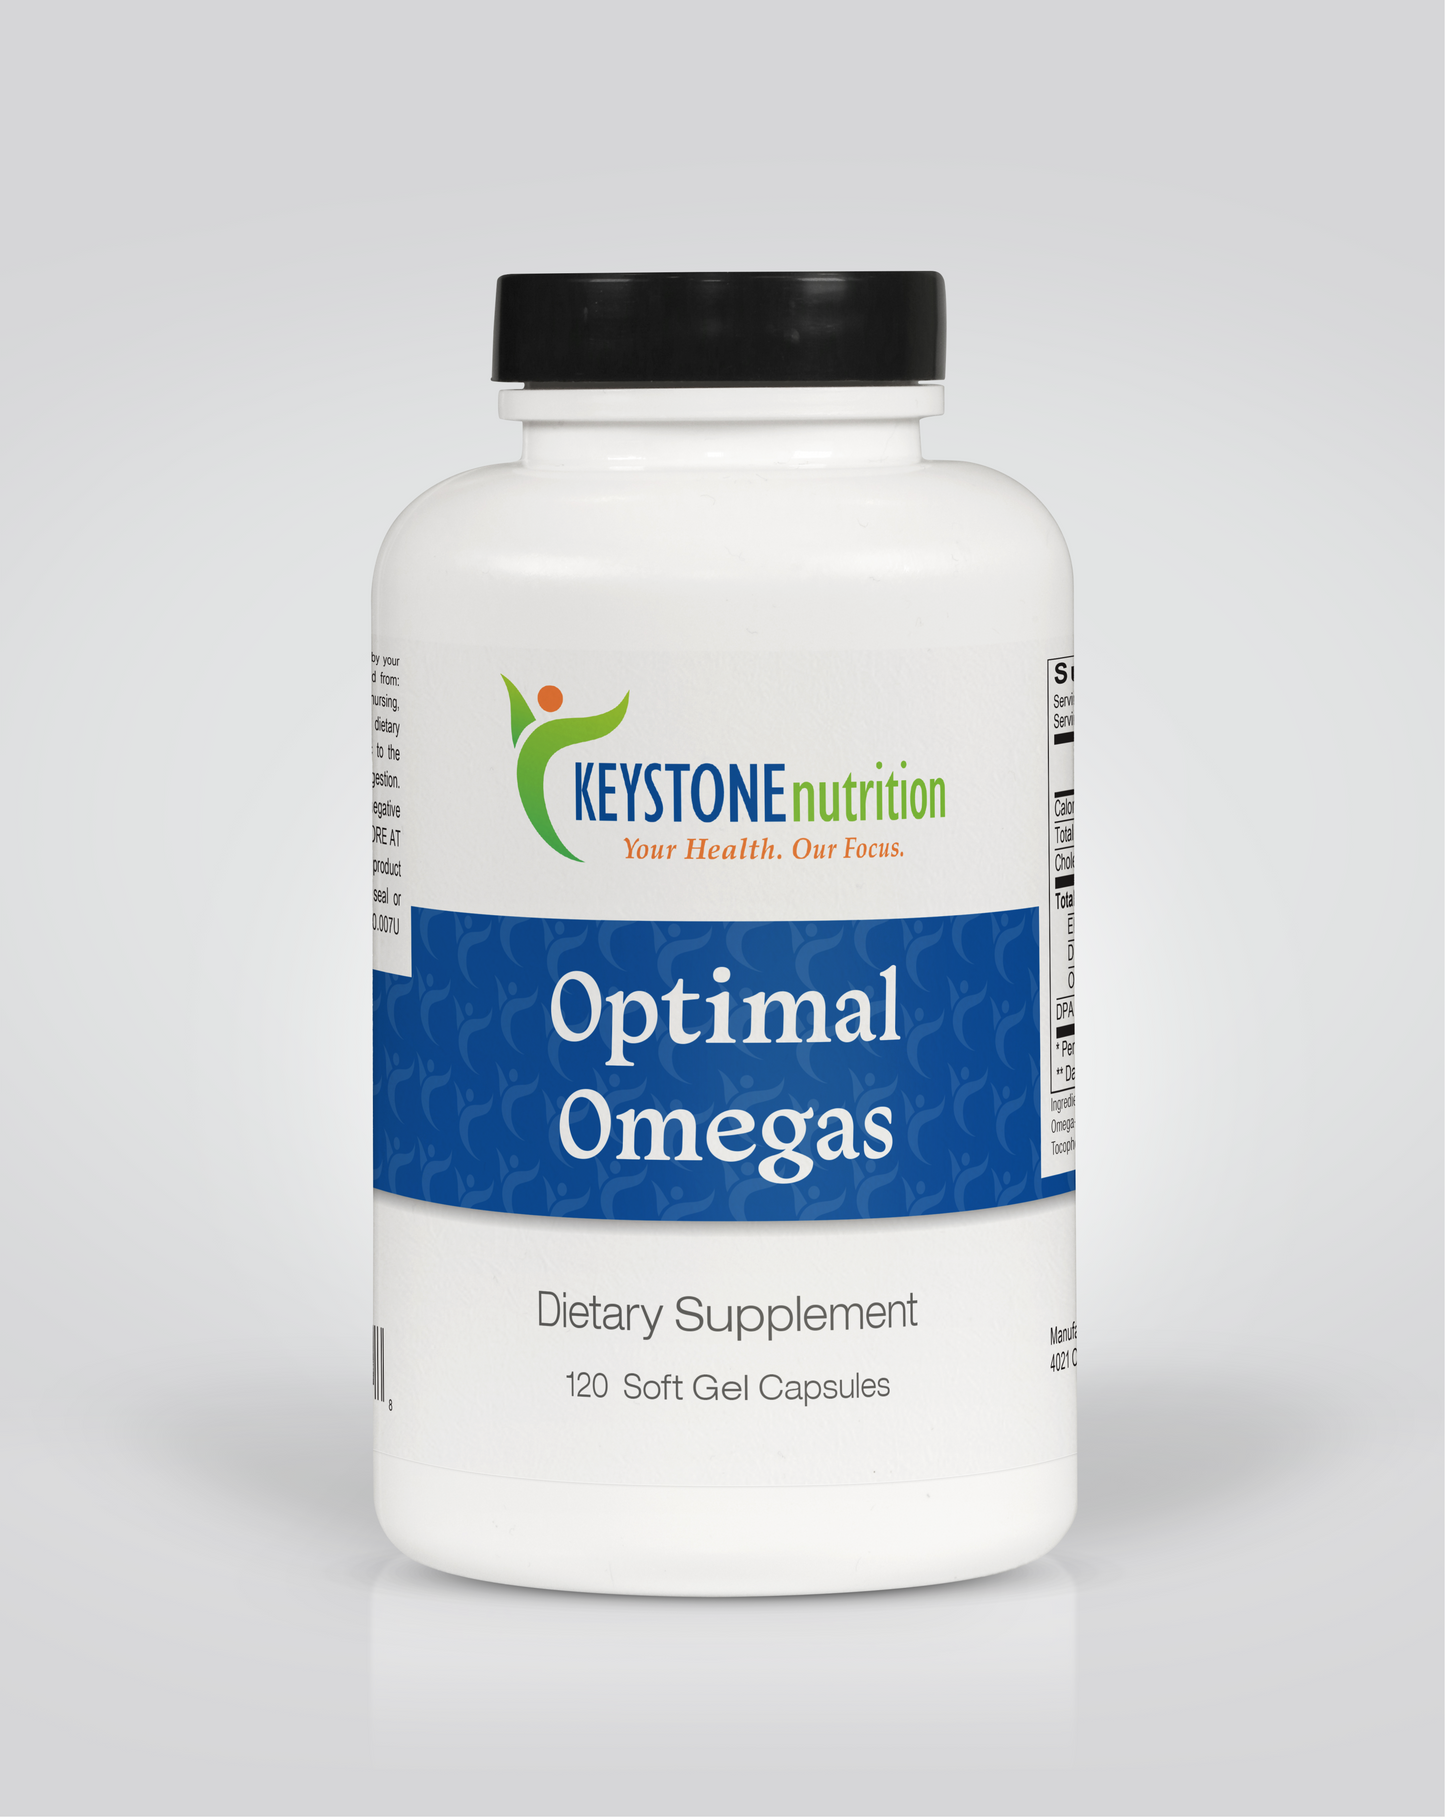 Optimal Omegas